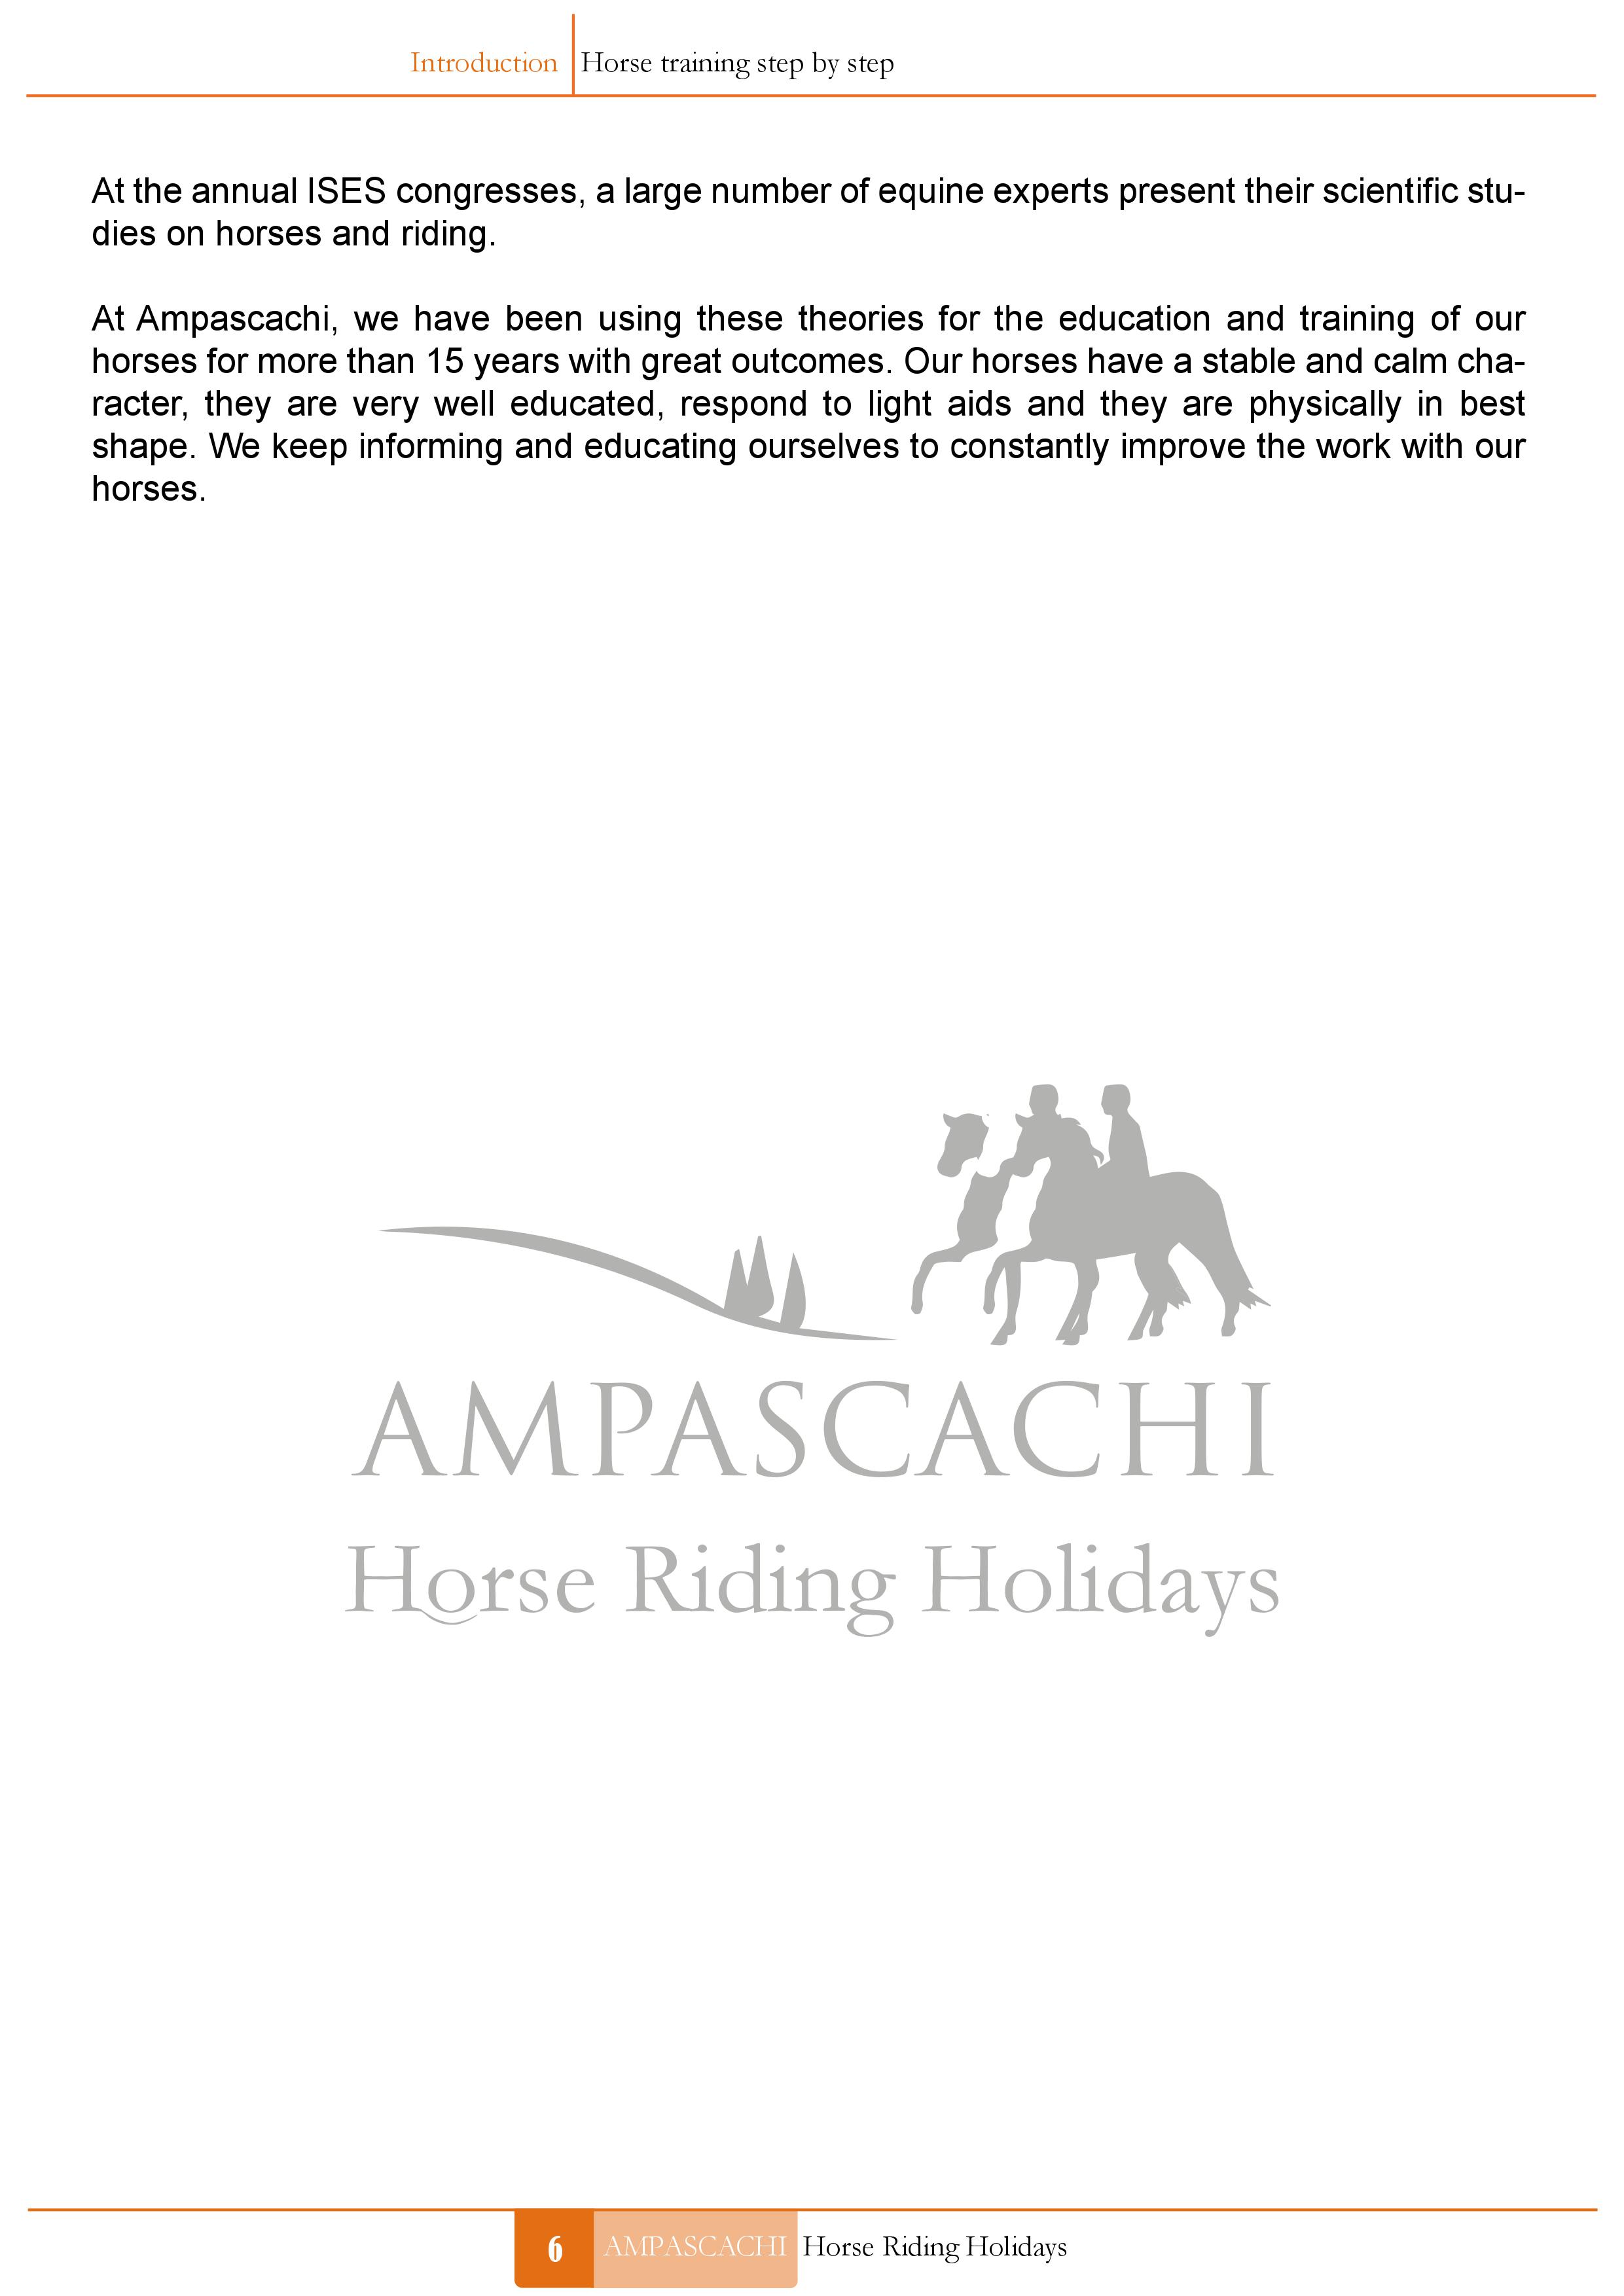 Ebook Horse training - Introduction 2